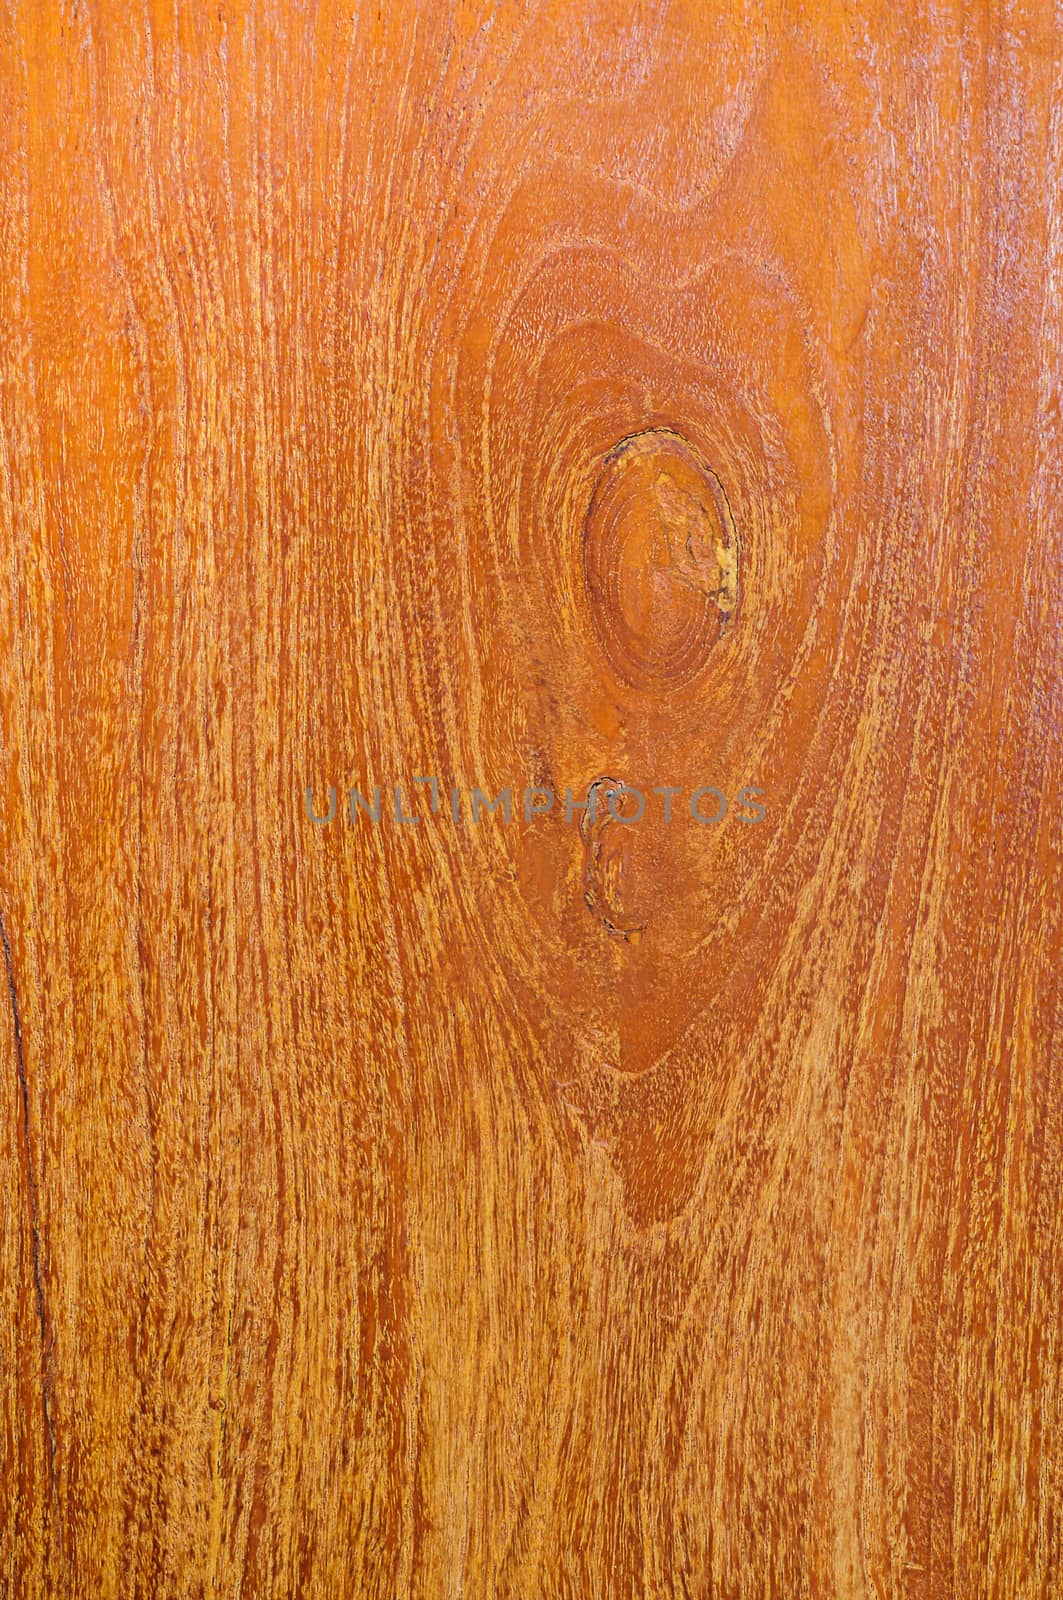 Wooden planks texture. Wooden background.